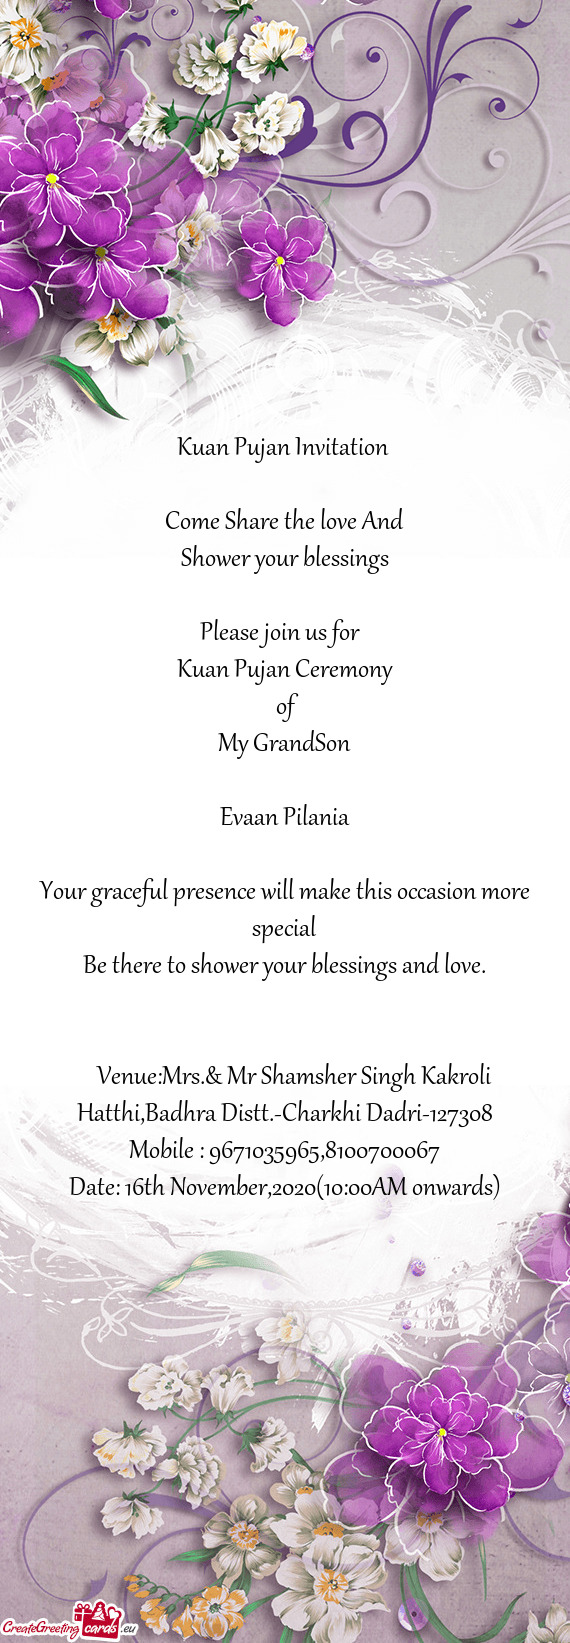 Venue:Mrs.& Mr Shamsher Singh Kakroli Hatthi,Badhra Distt.-Charkhi Dadri-127308